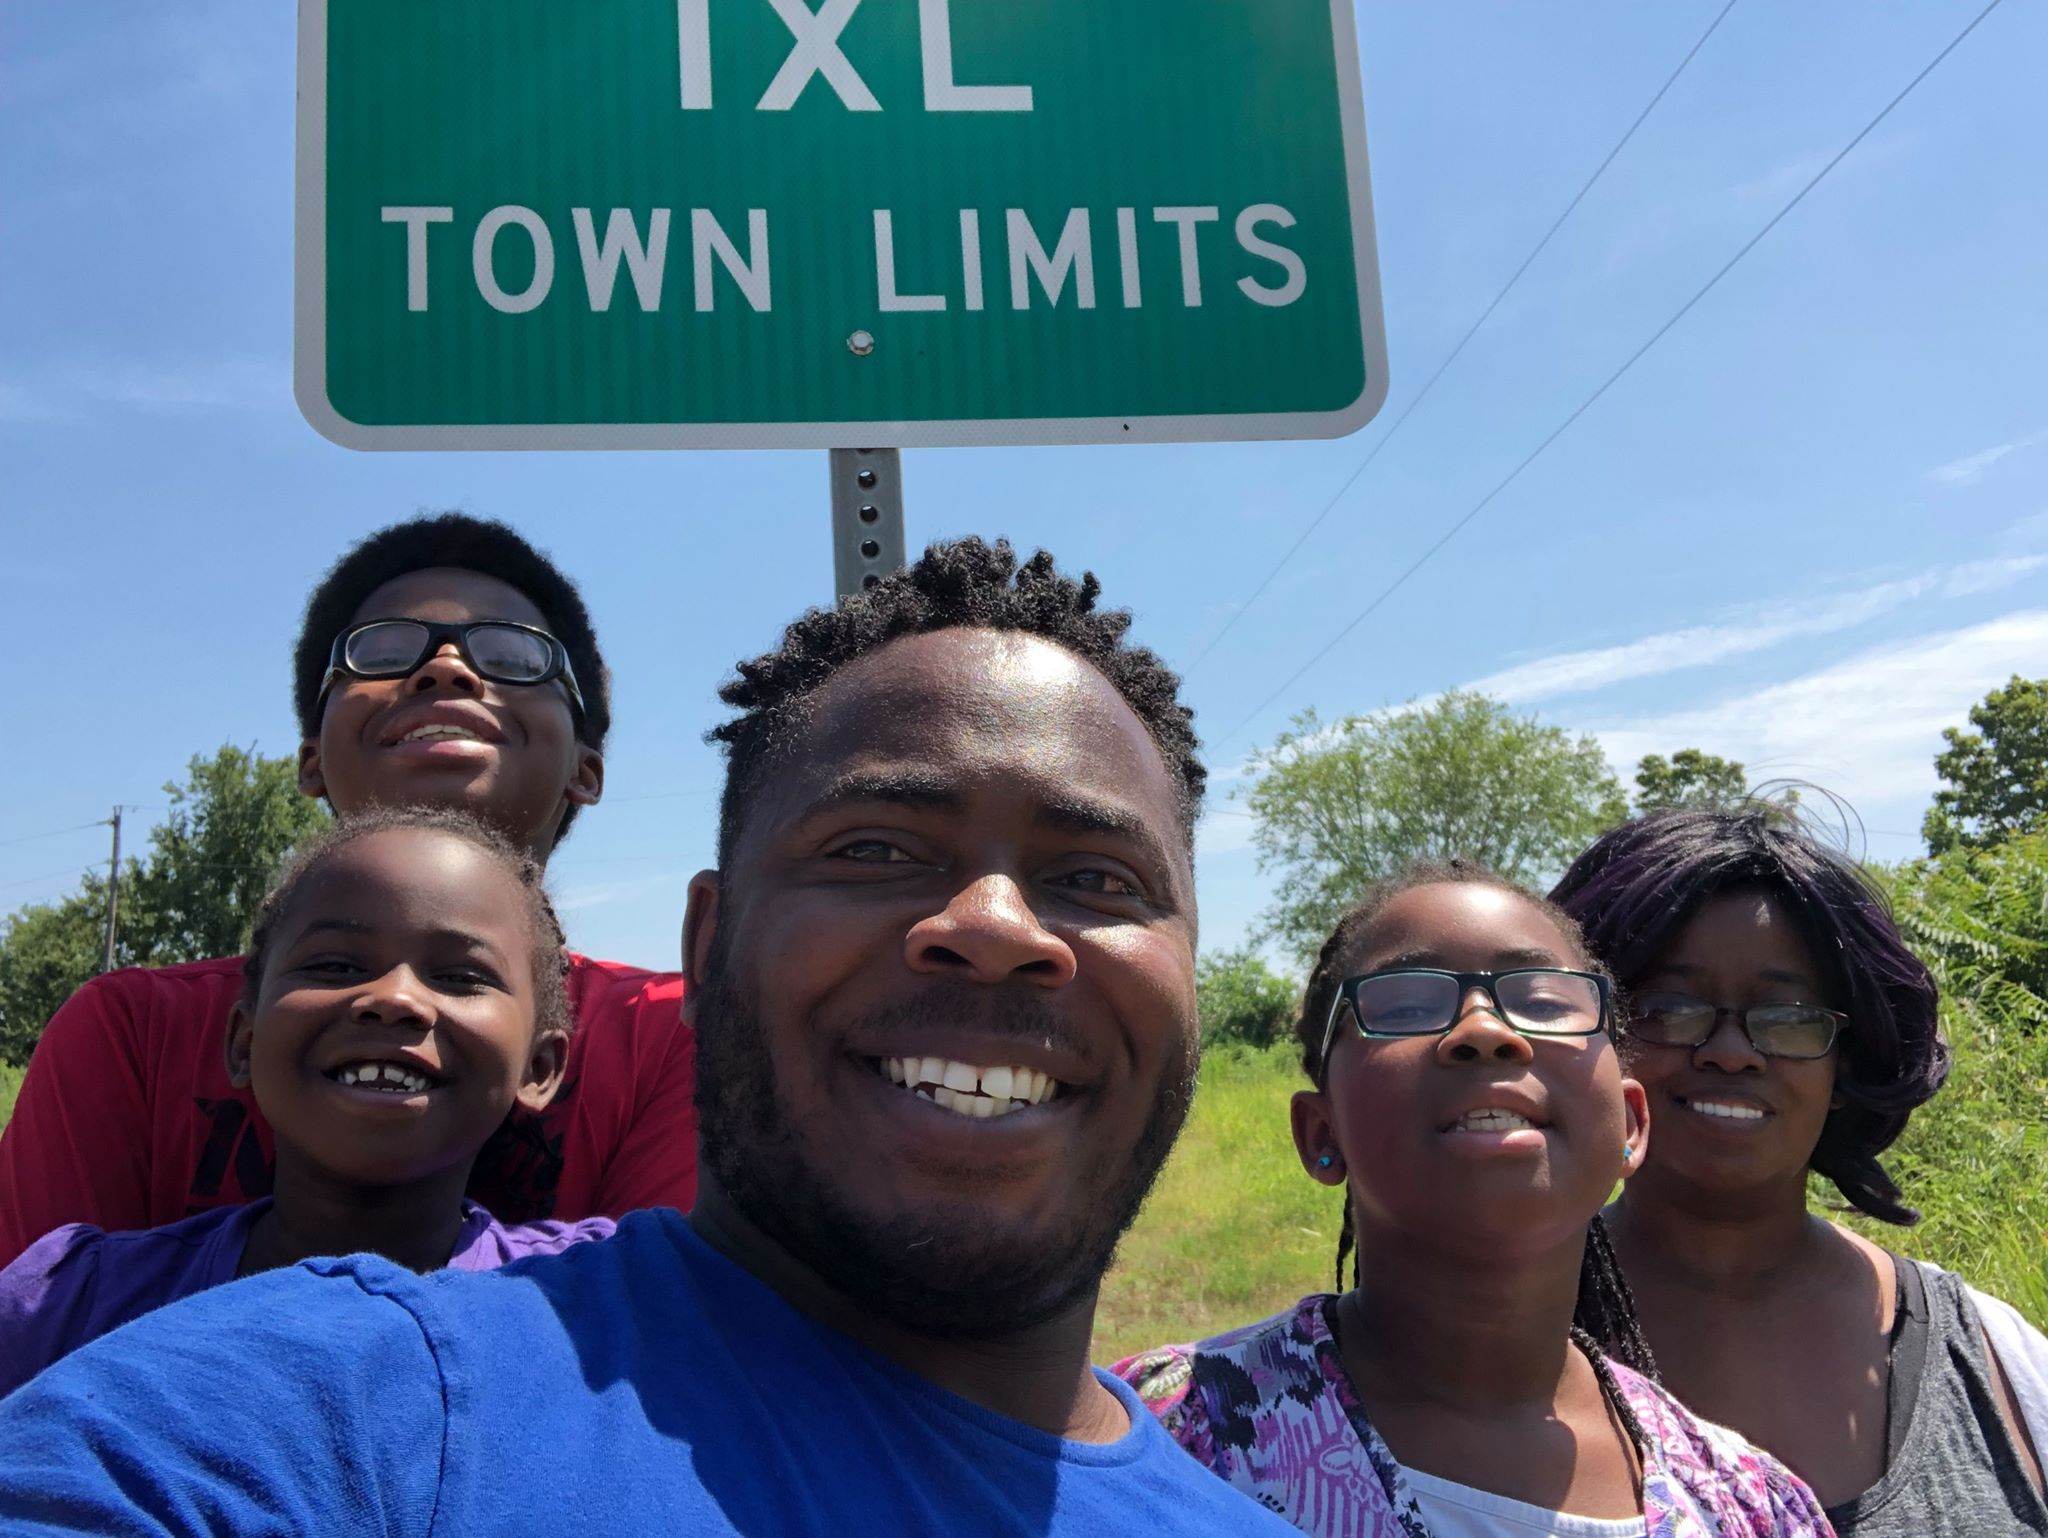 IXL Town Limits sign